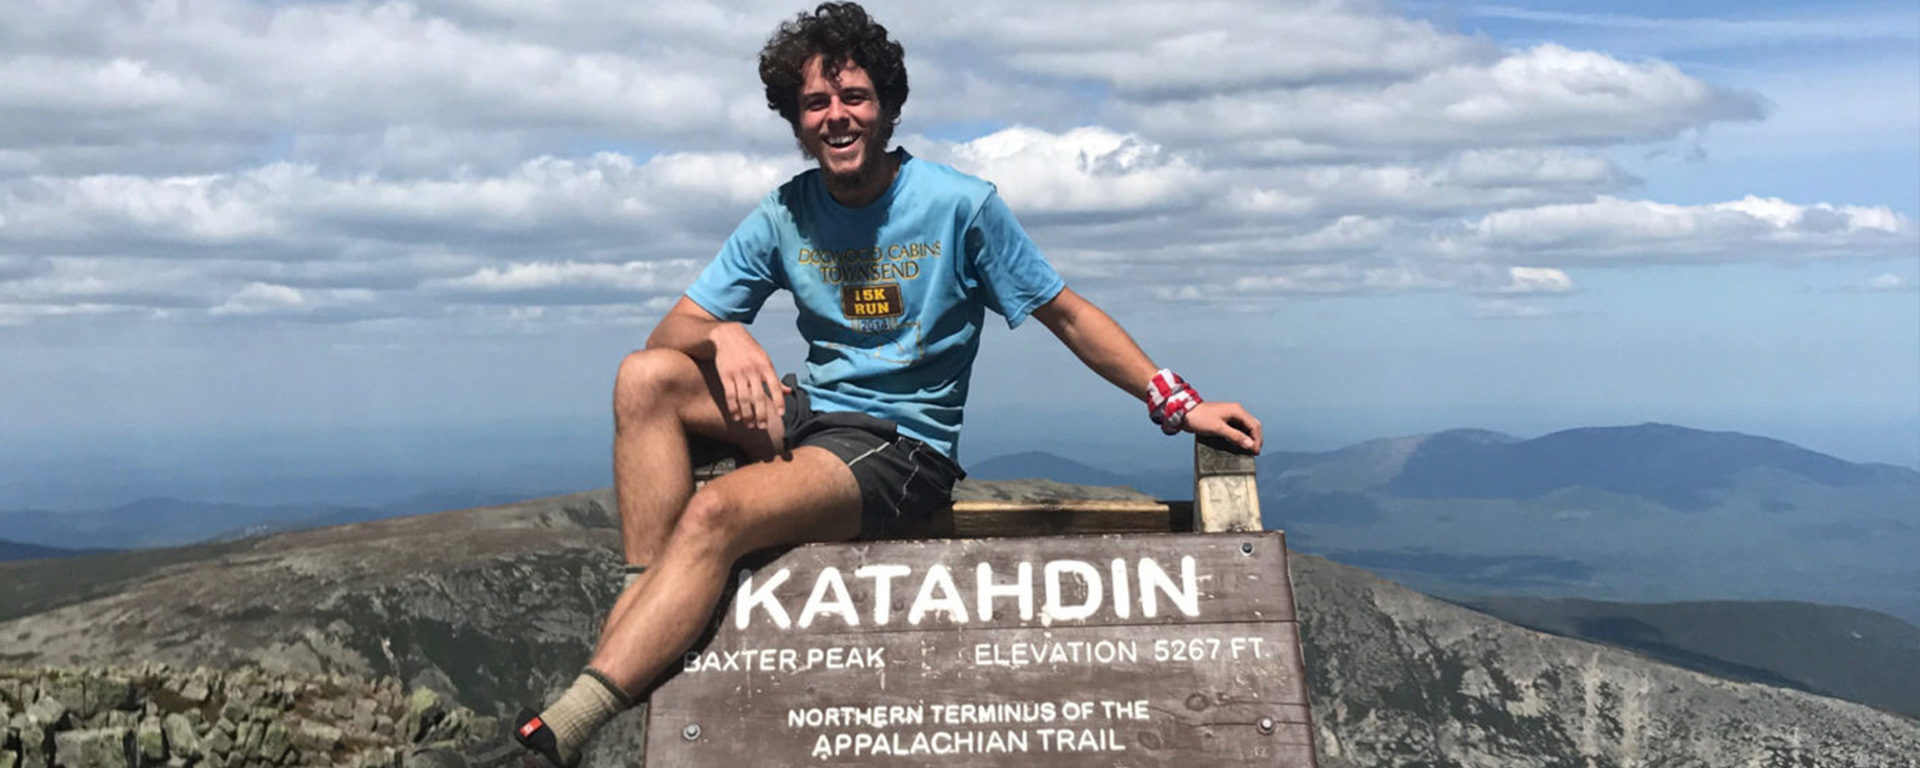 Troy Galyon on Mount Katahdidn, the terminl point of the Appalachian trail